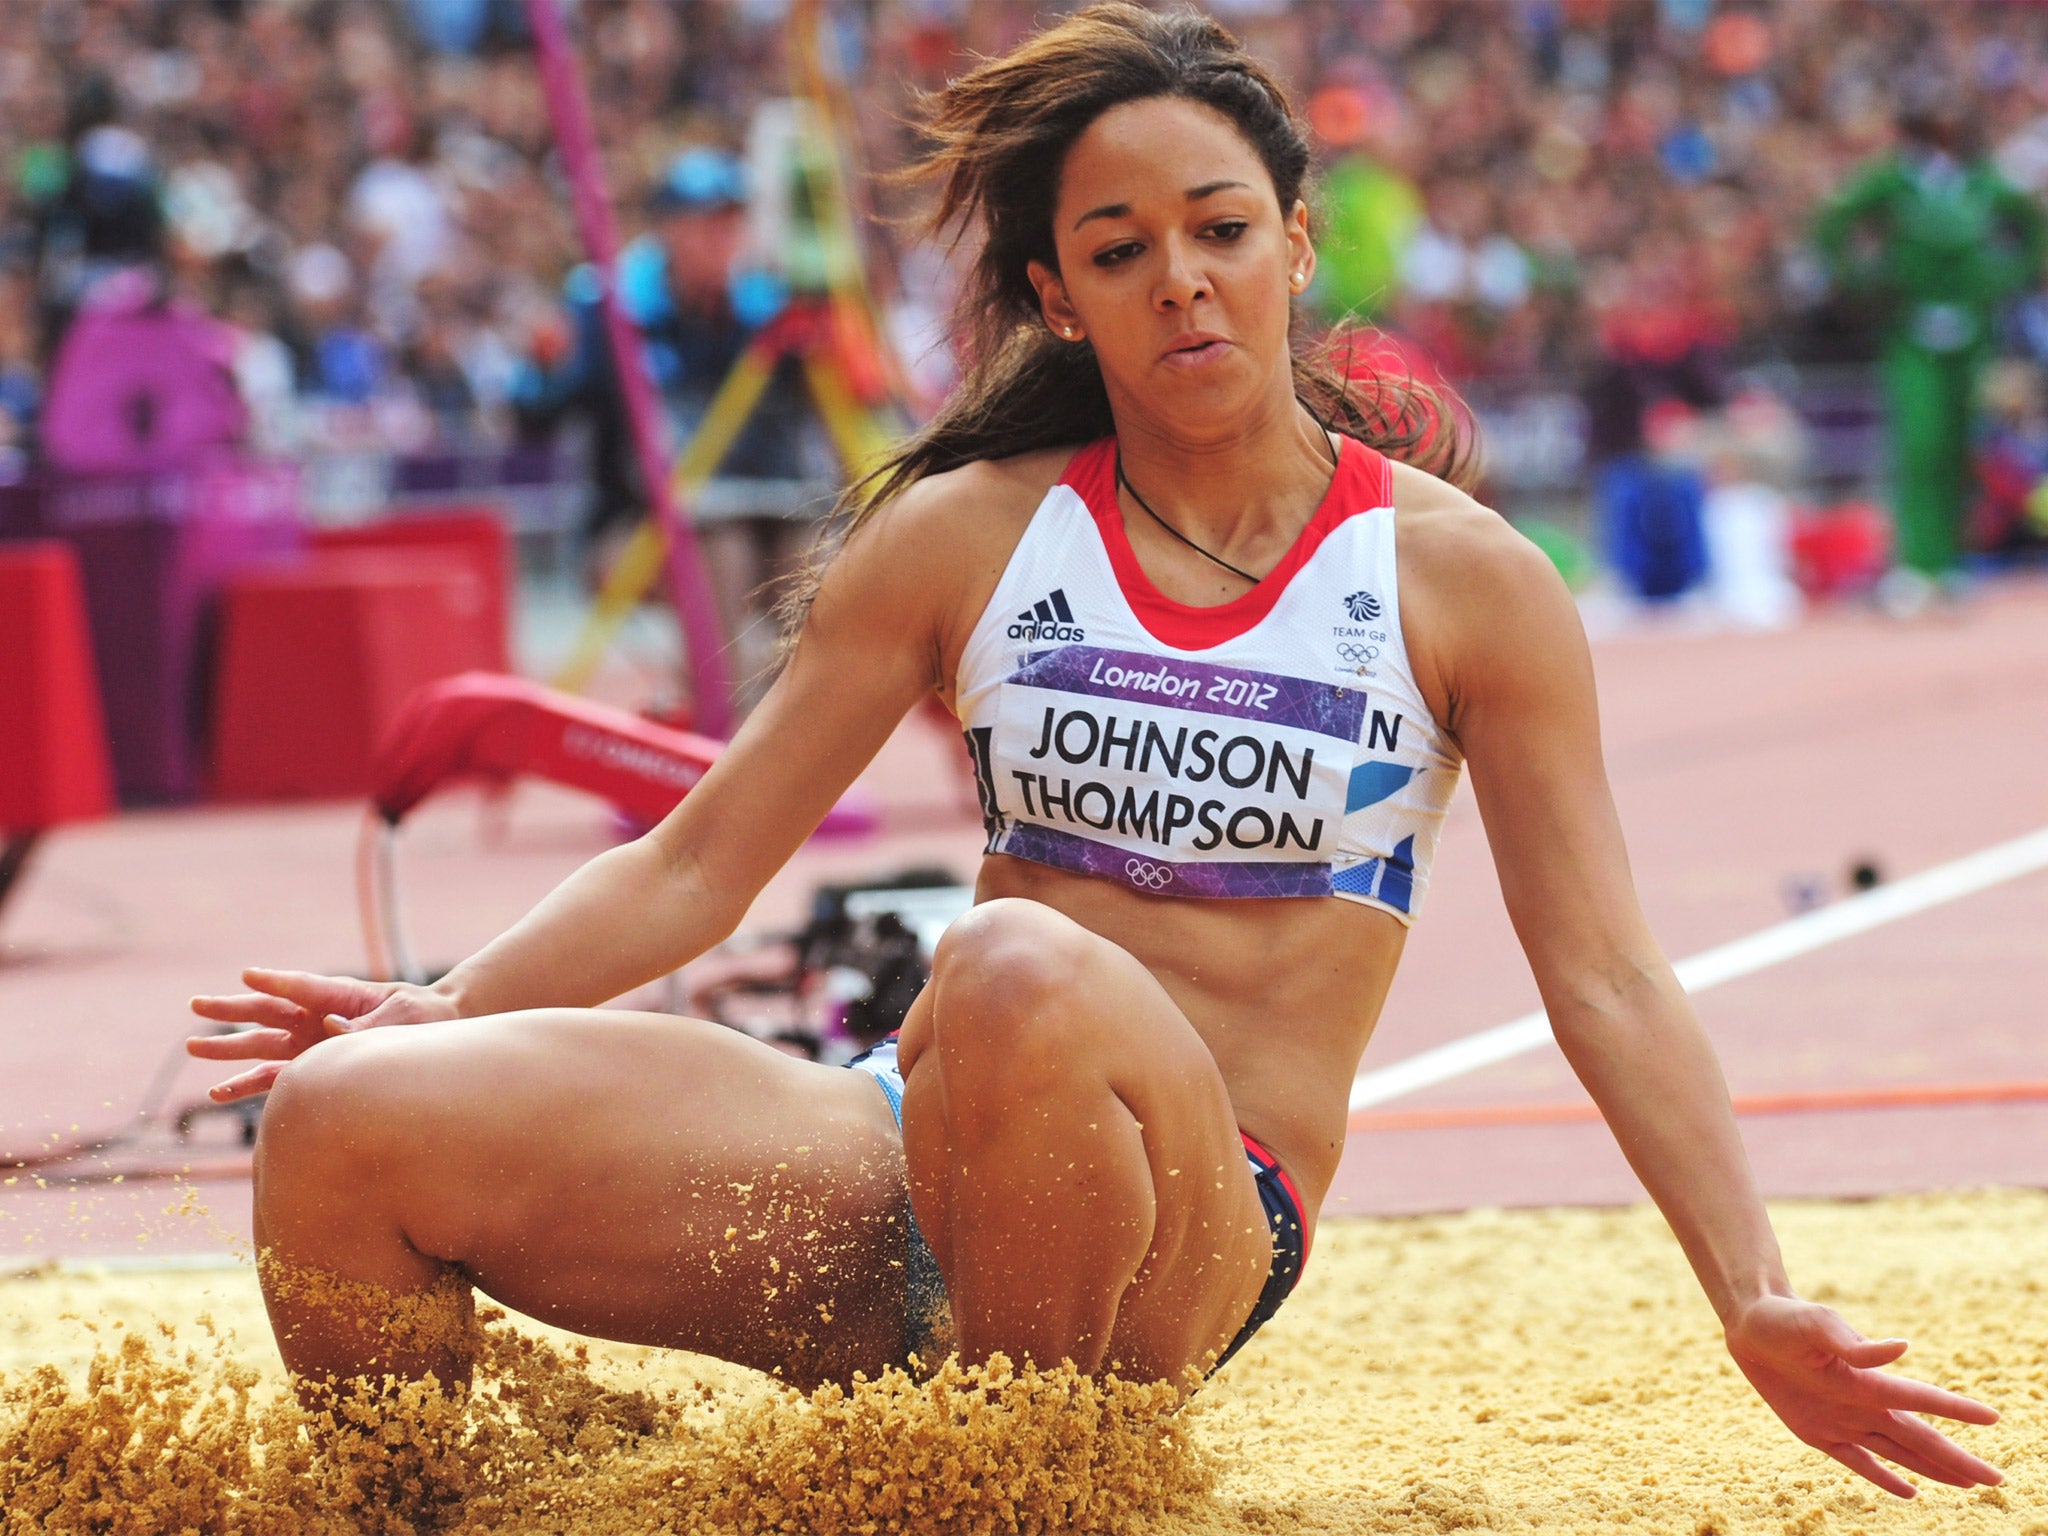 Katarina Johnson-Thompson jumping during the 2012 Games